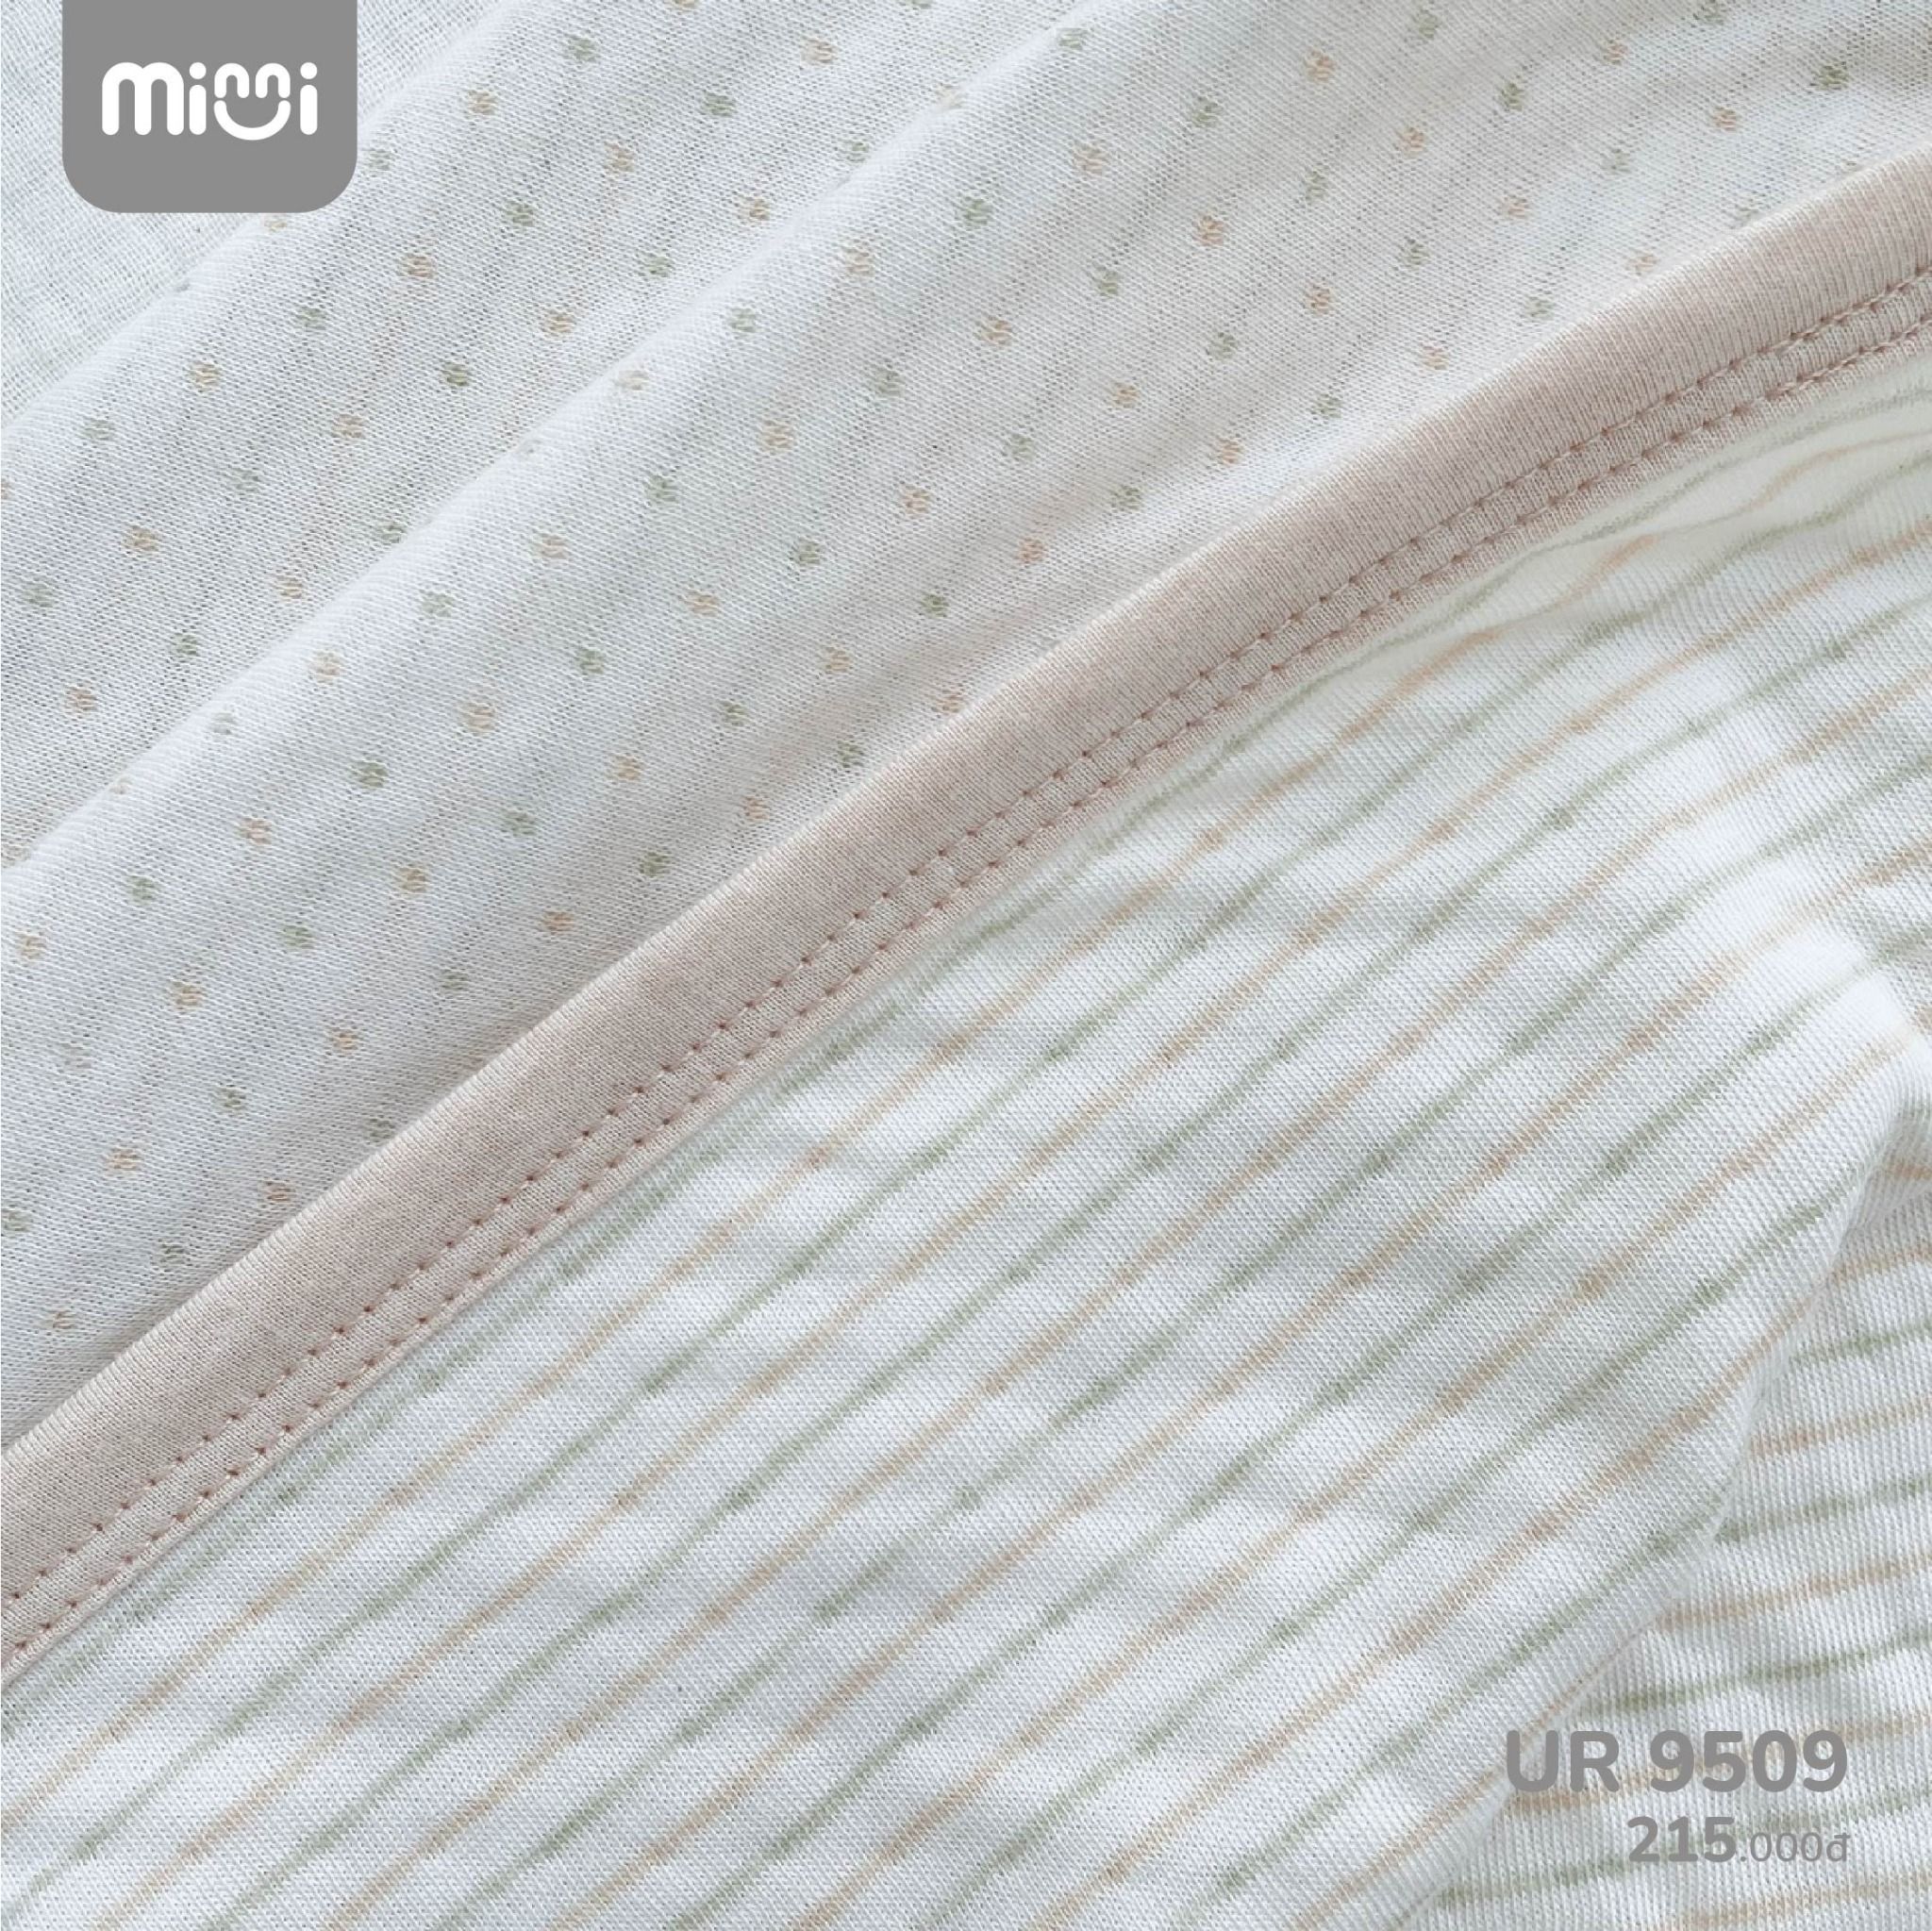  Chăn ủ  Minni Organic Cotton UR 9509 